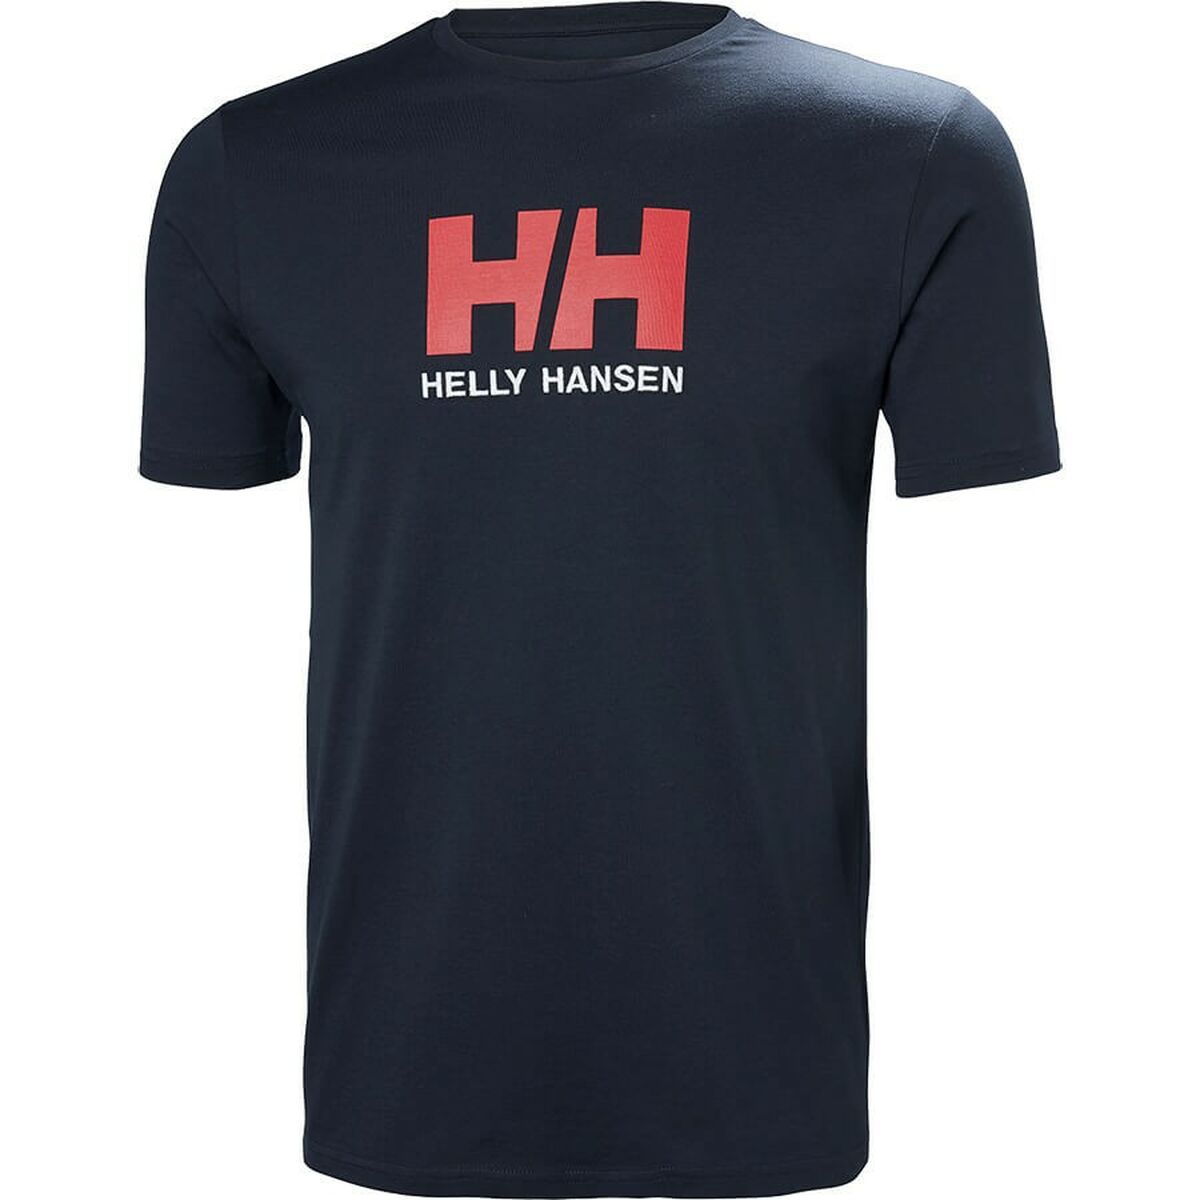 T-shirt à manches courtes homme LOGO Helly Hansen 33979 597 Blue marine